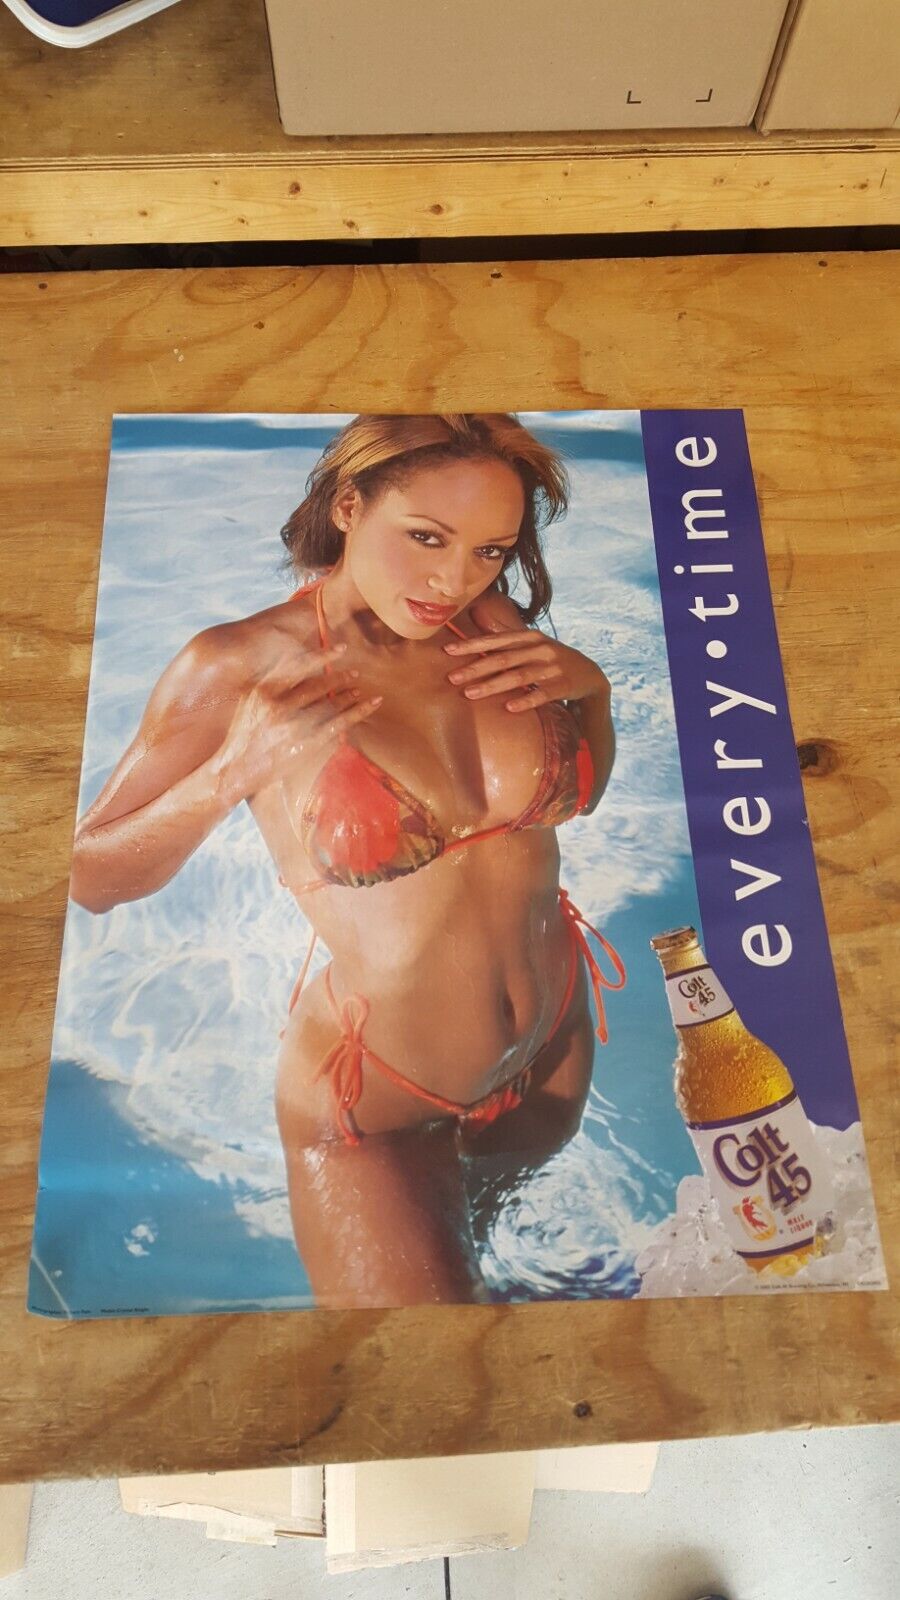 Colt 45 Malt Liquor Sexy Girl Bikini Beer Poster